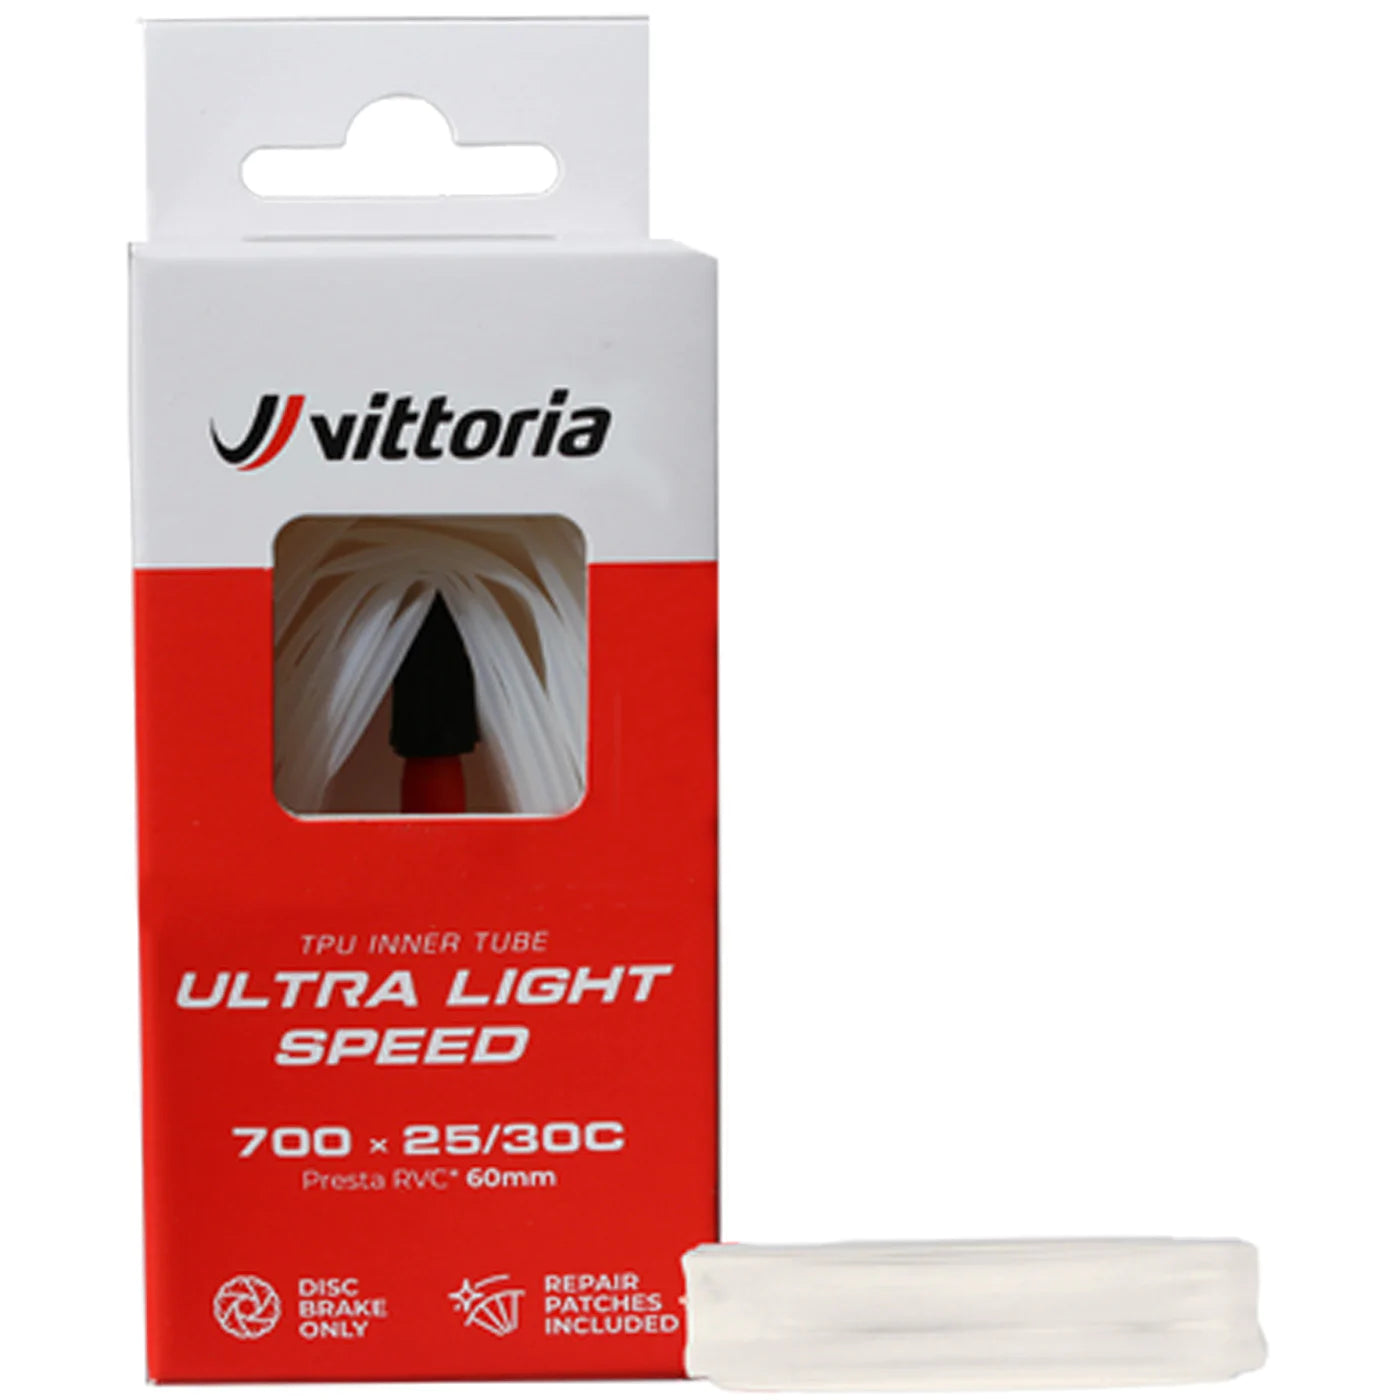 Vittoria Ultra Light Speed 700 X 25/30 Presta Tube